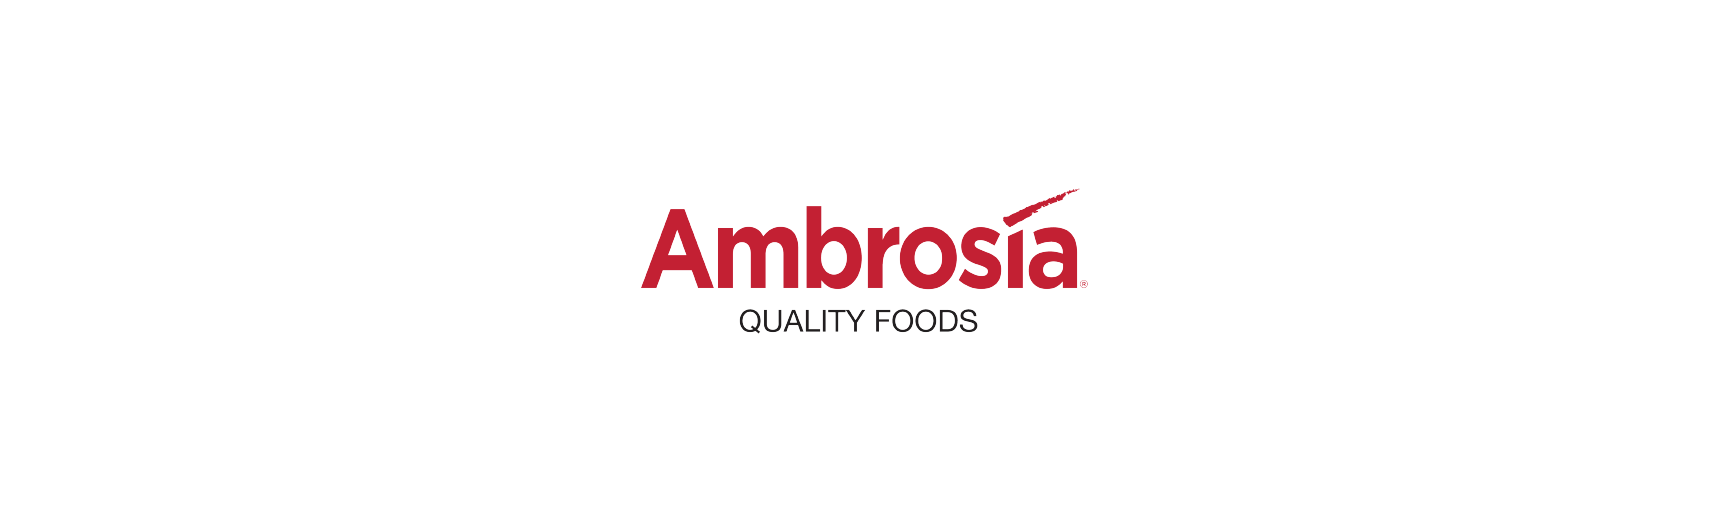 Ambrosia Logo Banner